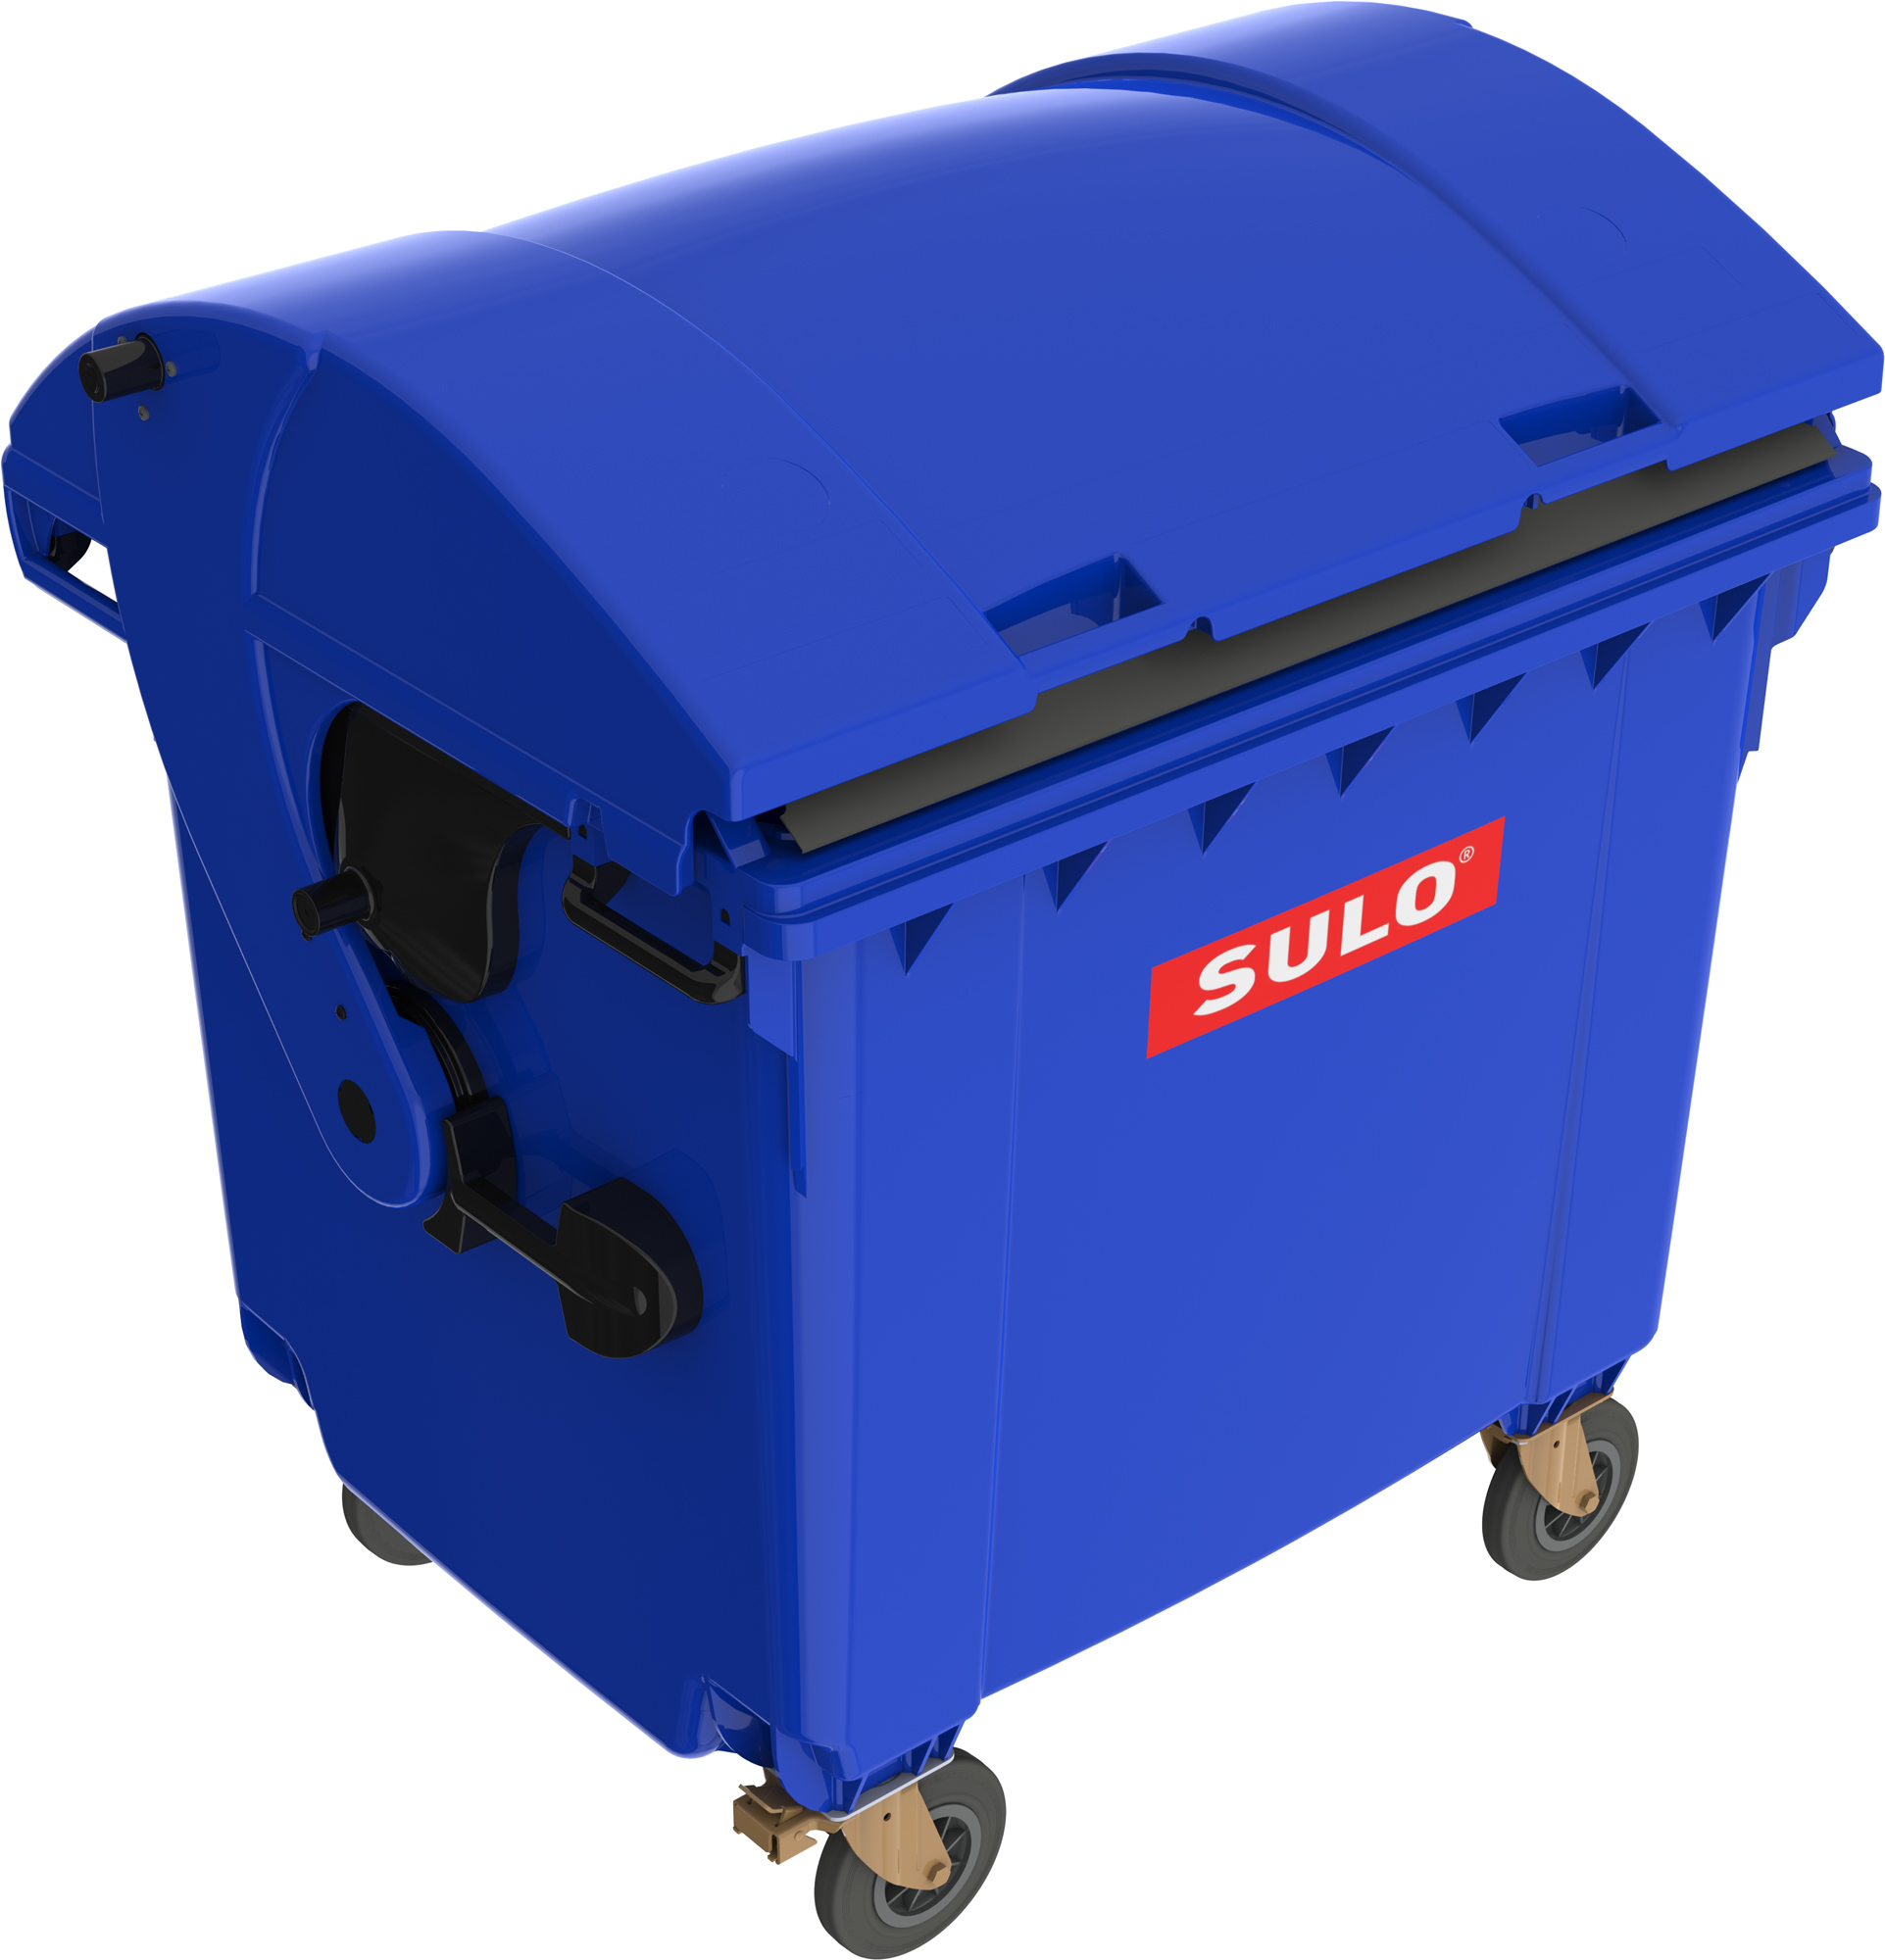 Eurocontainer din material plastic 1100 l albastru cu capac rotund SULO – Transport Inclus 1100